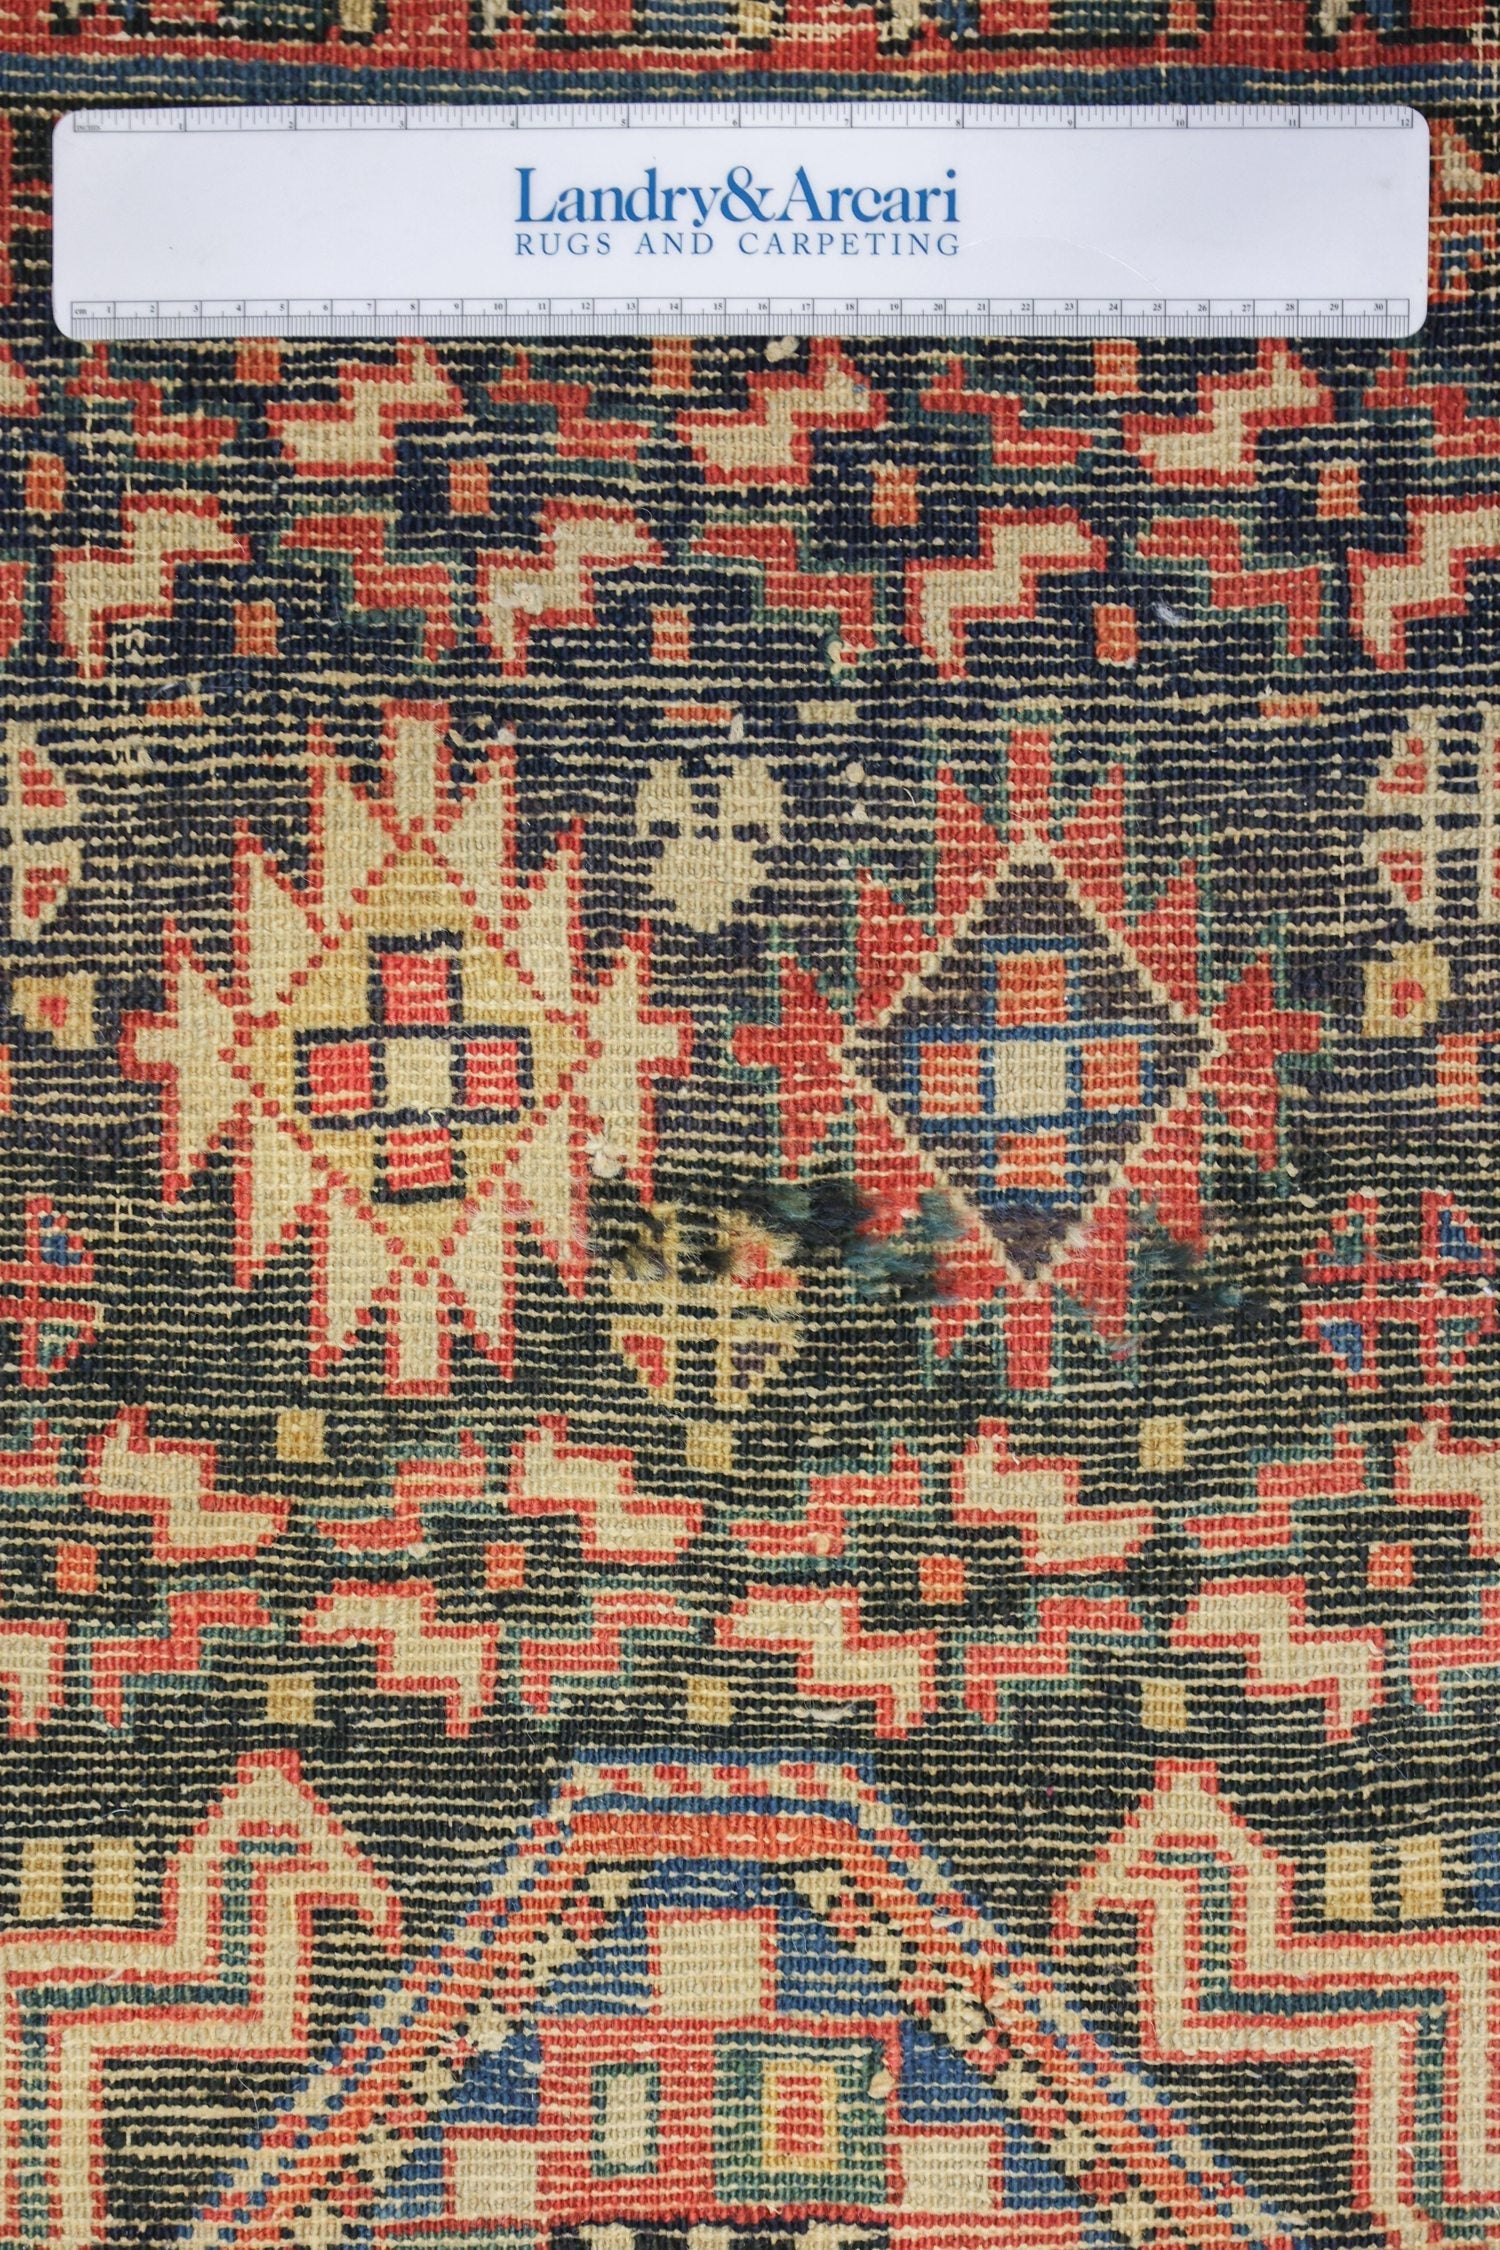 Antique Shasavan Handwoven Tribal Rug, J71130